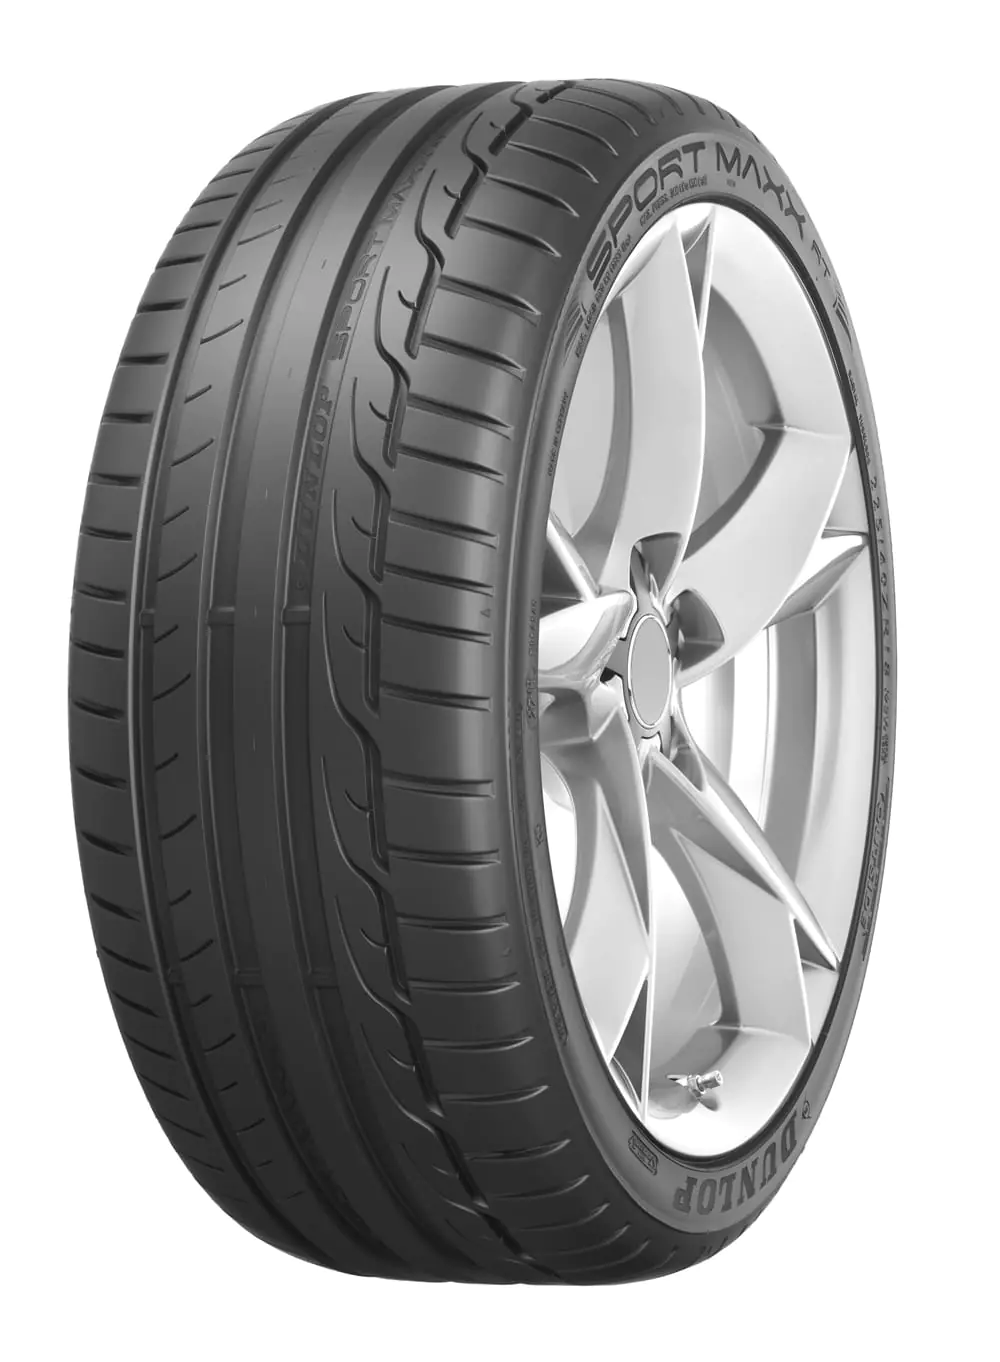 Dunlop Dunlop 225/45 R17 91W SP.MAXX RT MFS pneumatici nuovi Estivo 